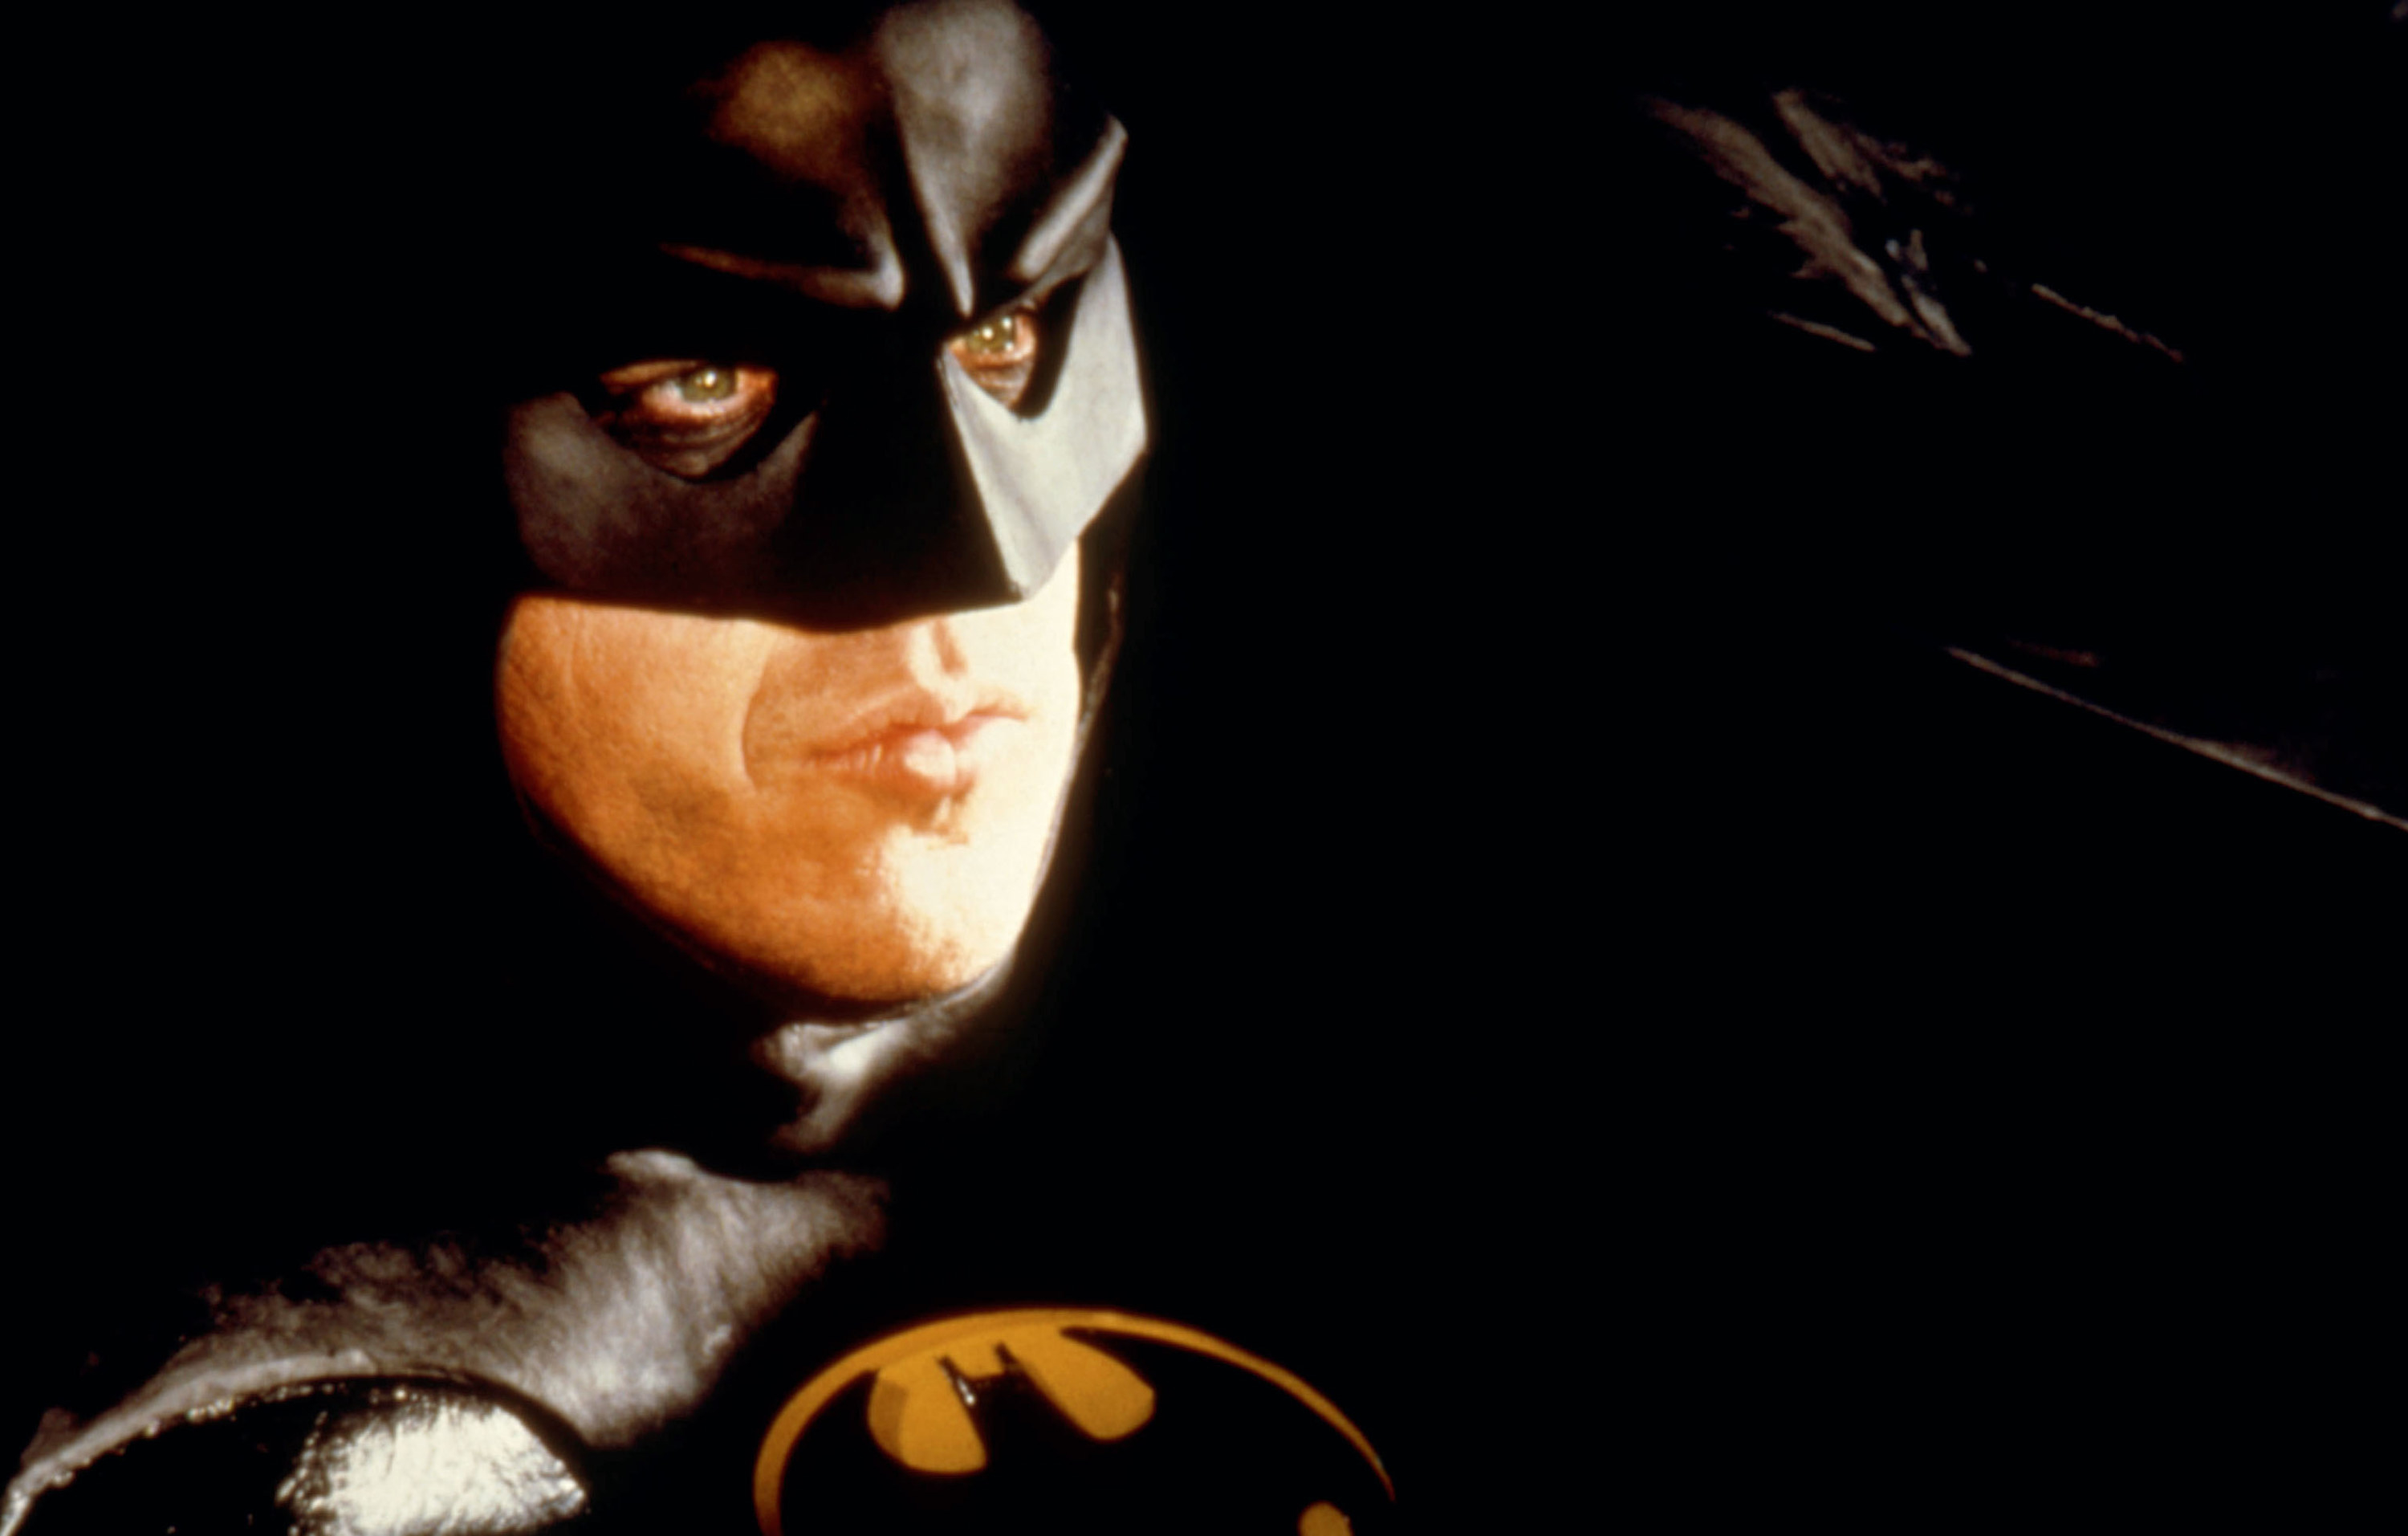 Michael Keaton as Batman in the Batmobile